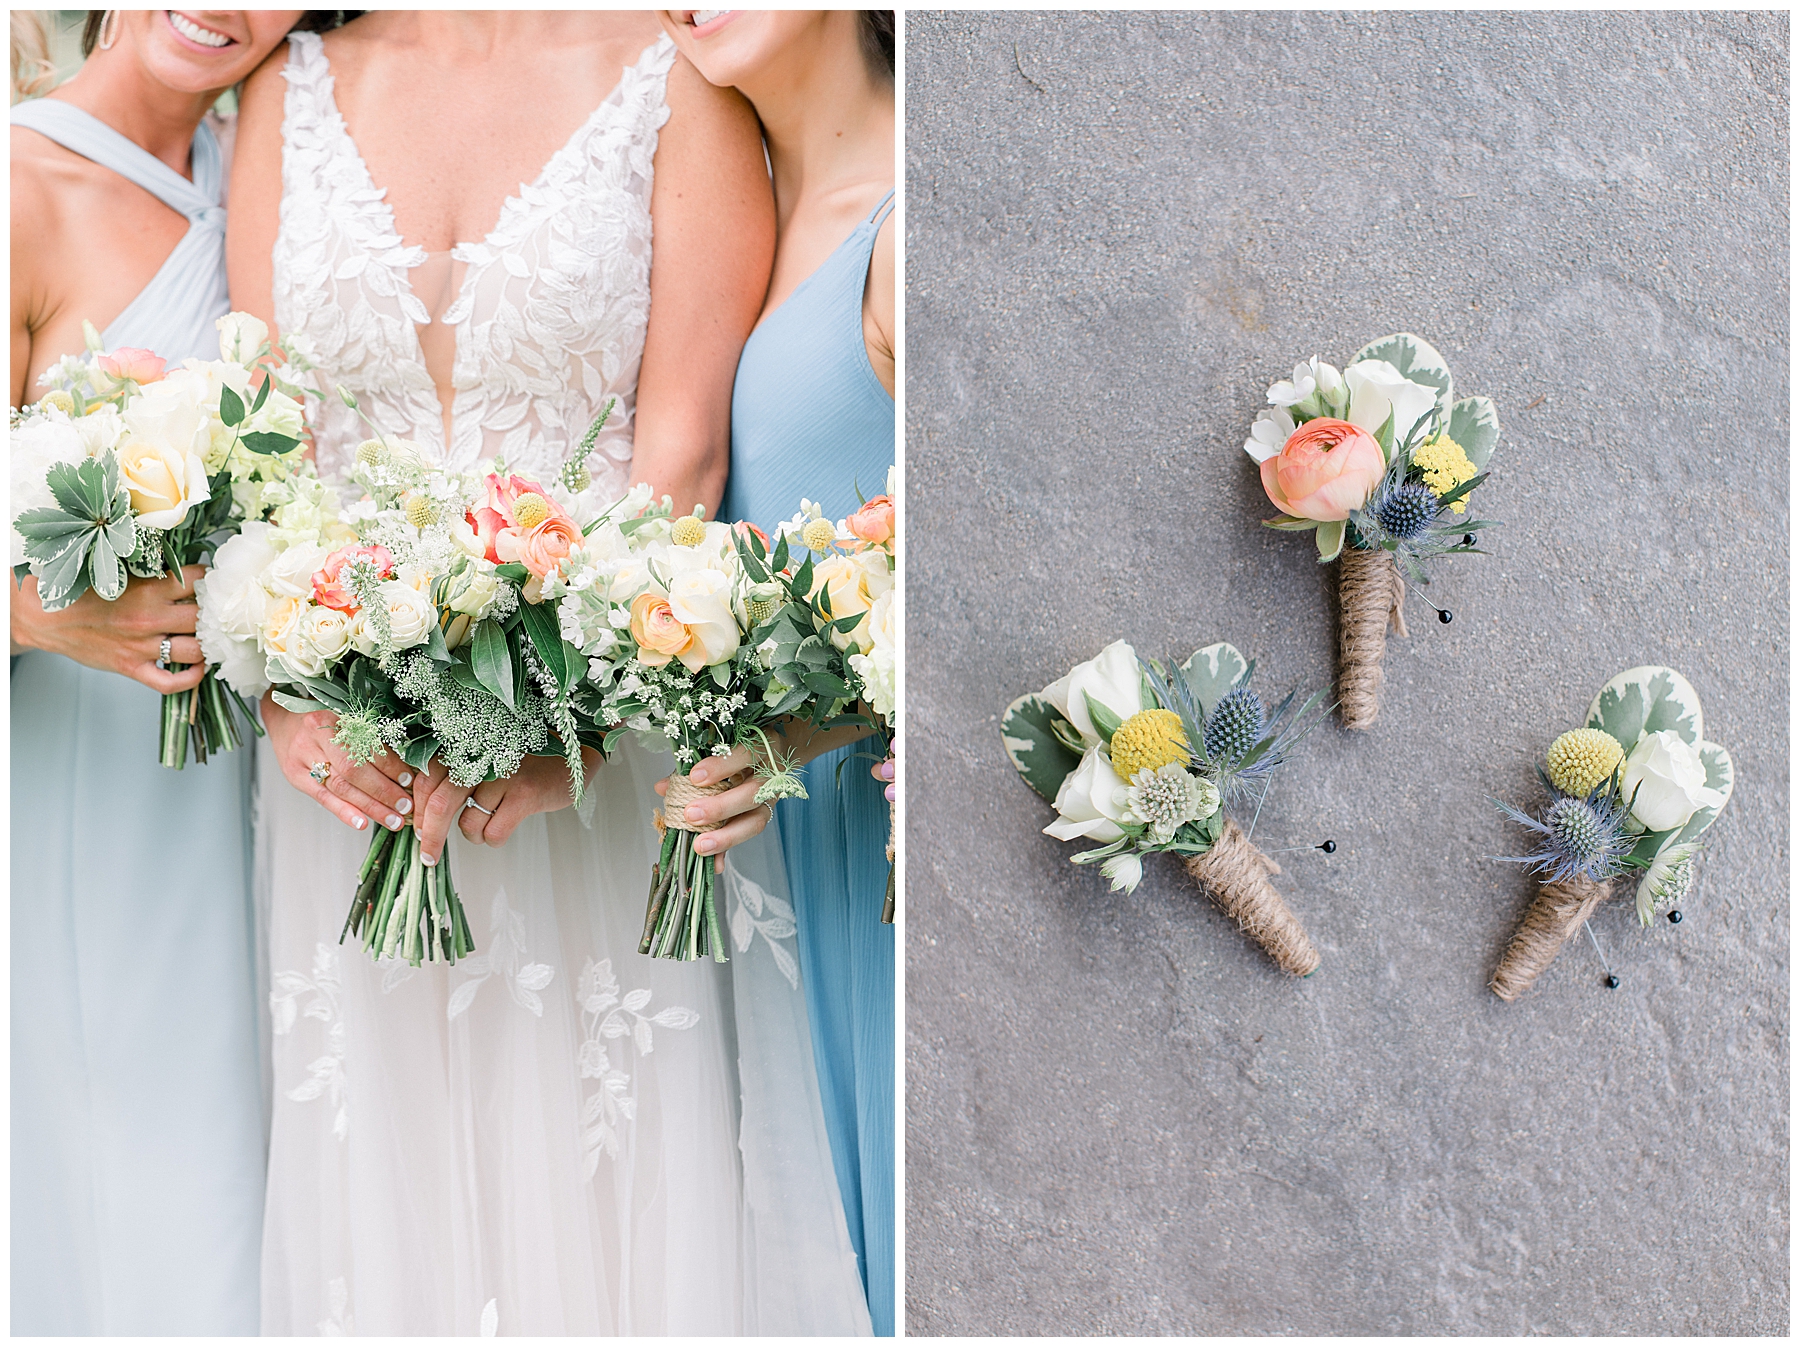 MA wedding day details - flower arrangements by Olive James Bouquets